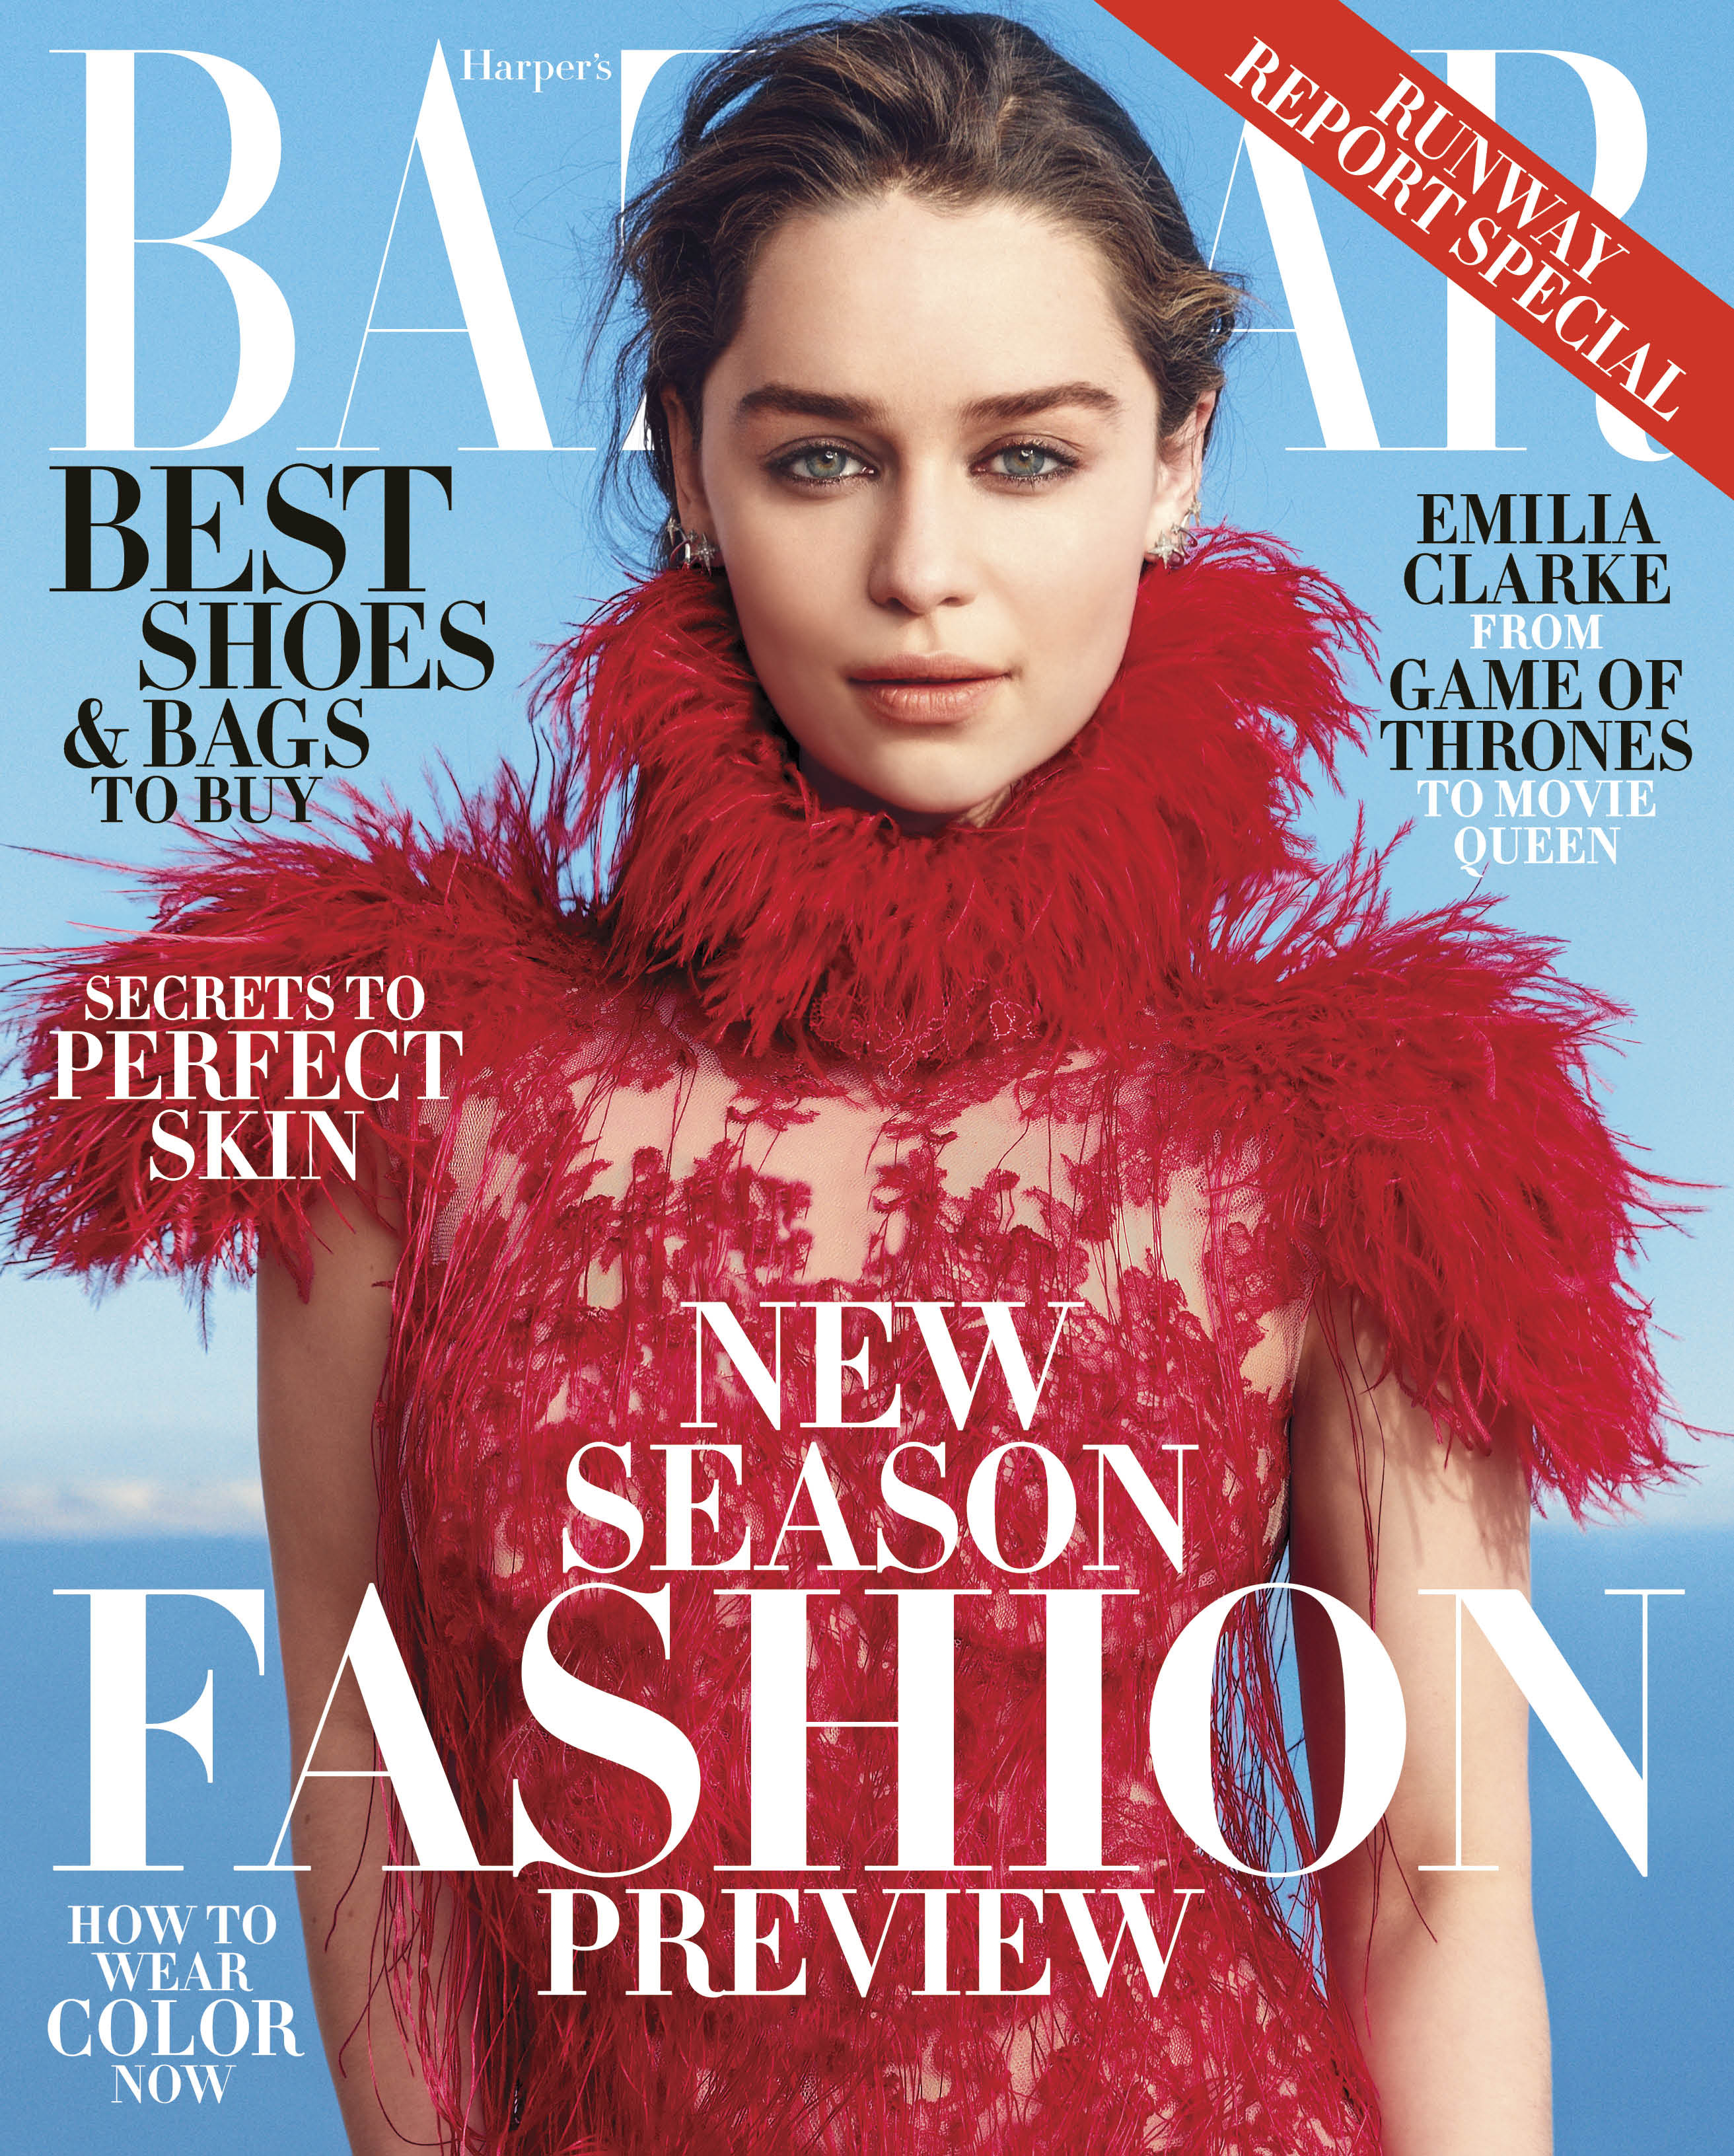 Emilia Clarke Covers Harper's Bazaar - Daily Front Row